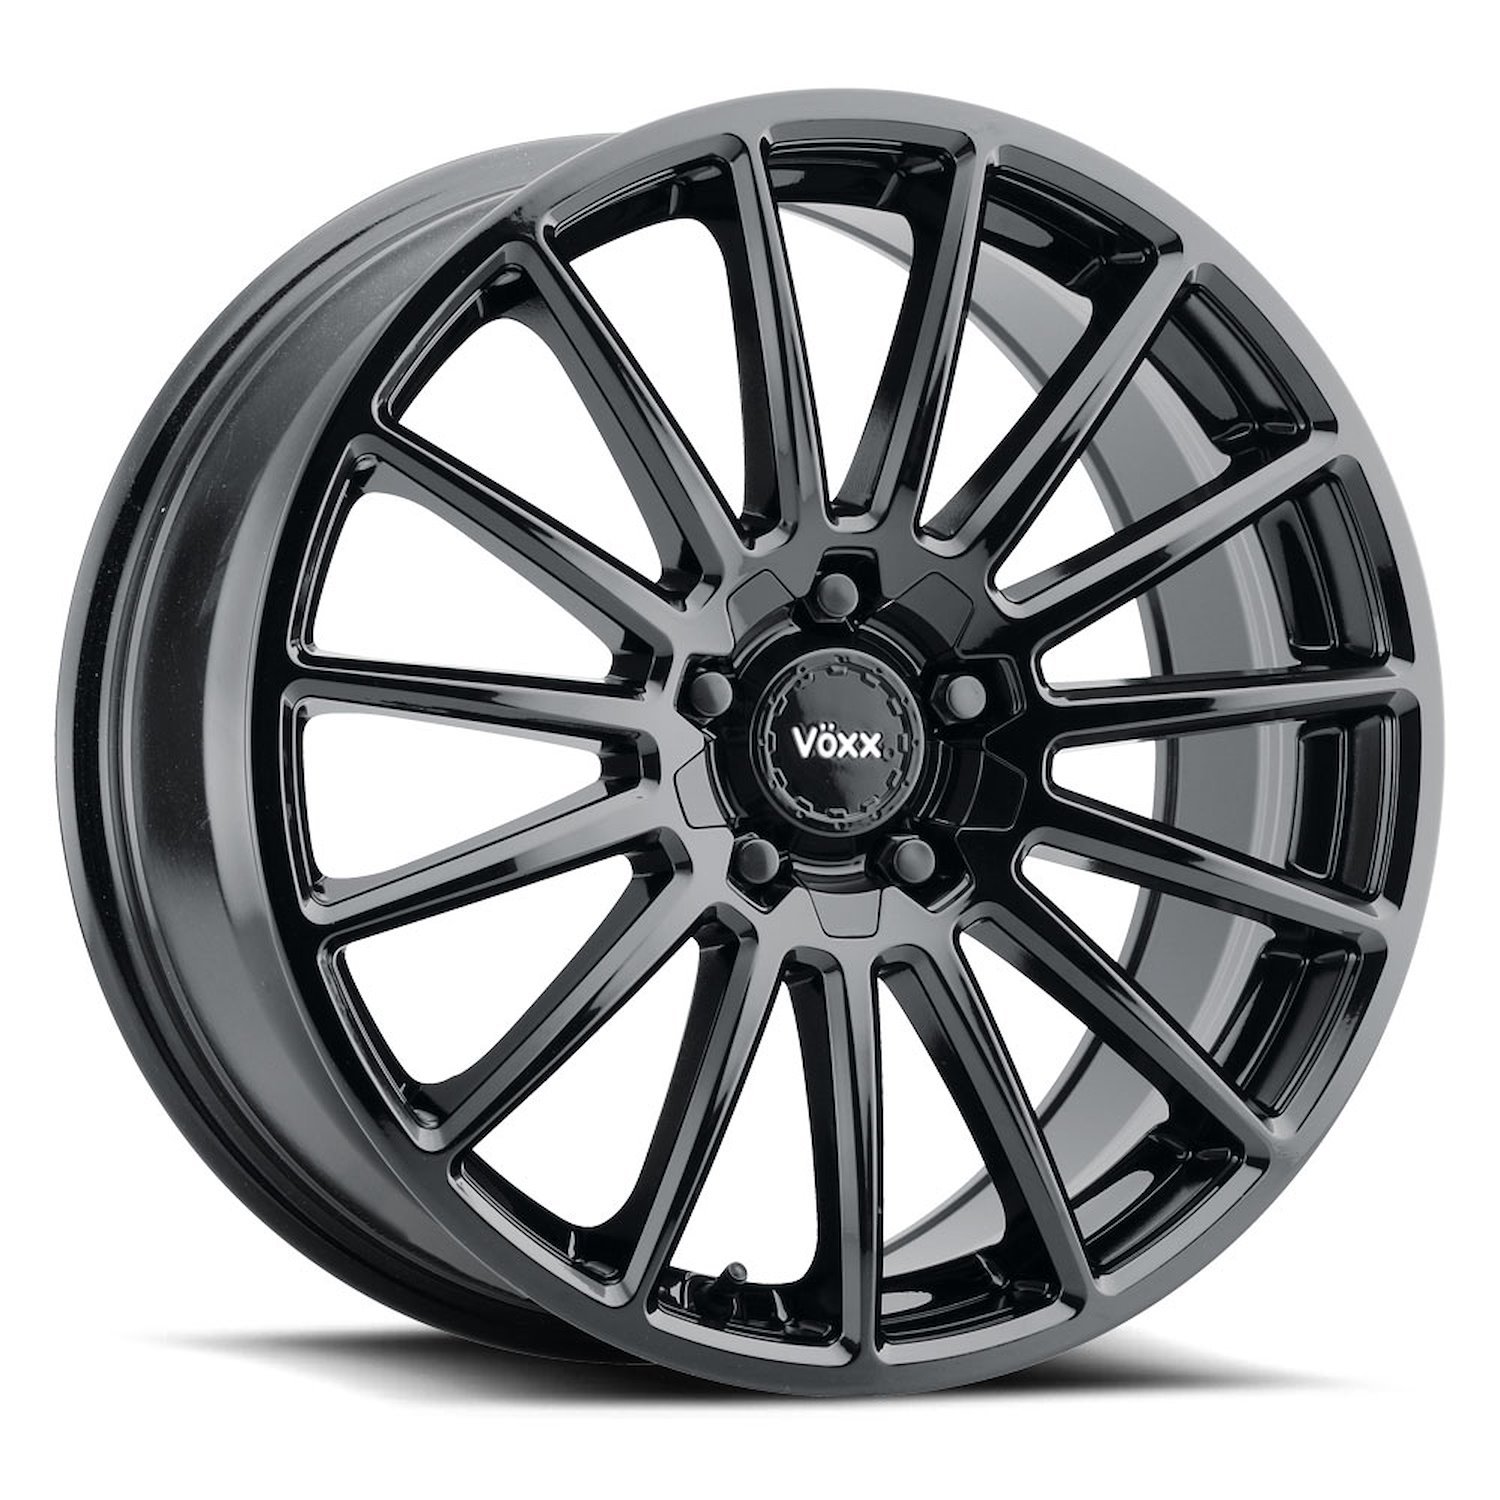 CAS 775-5003-40 GB Casina Wheel [Size: 17" x 7.50"] Finish: Gloss Black